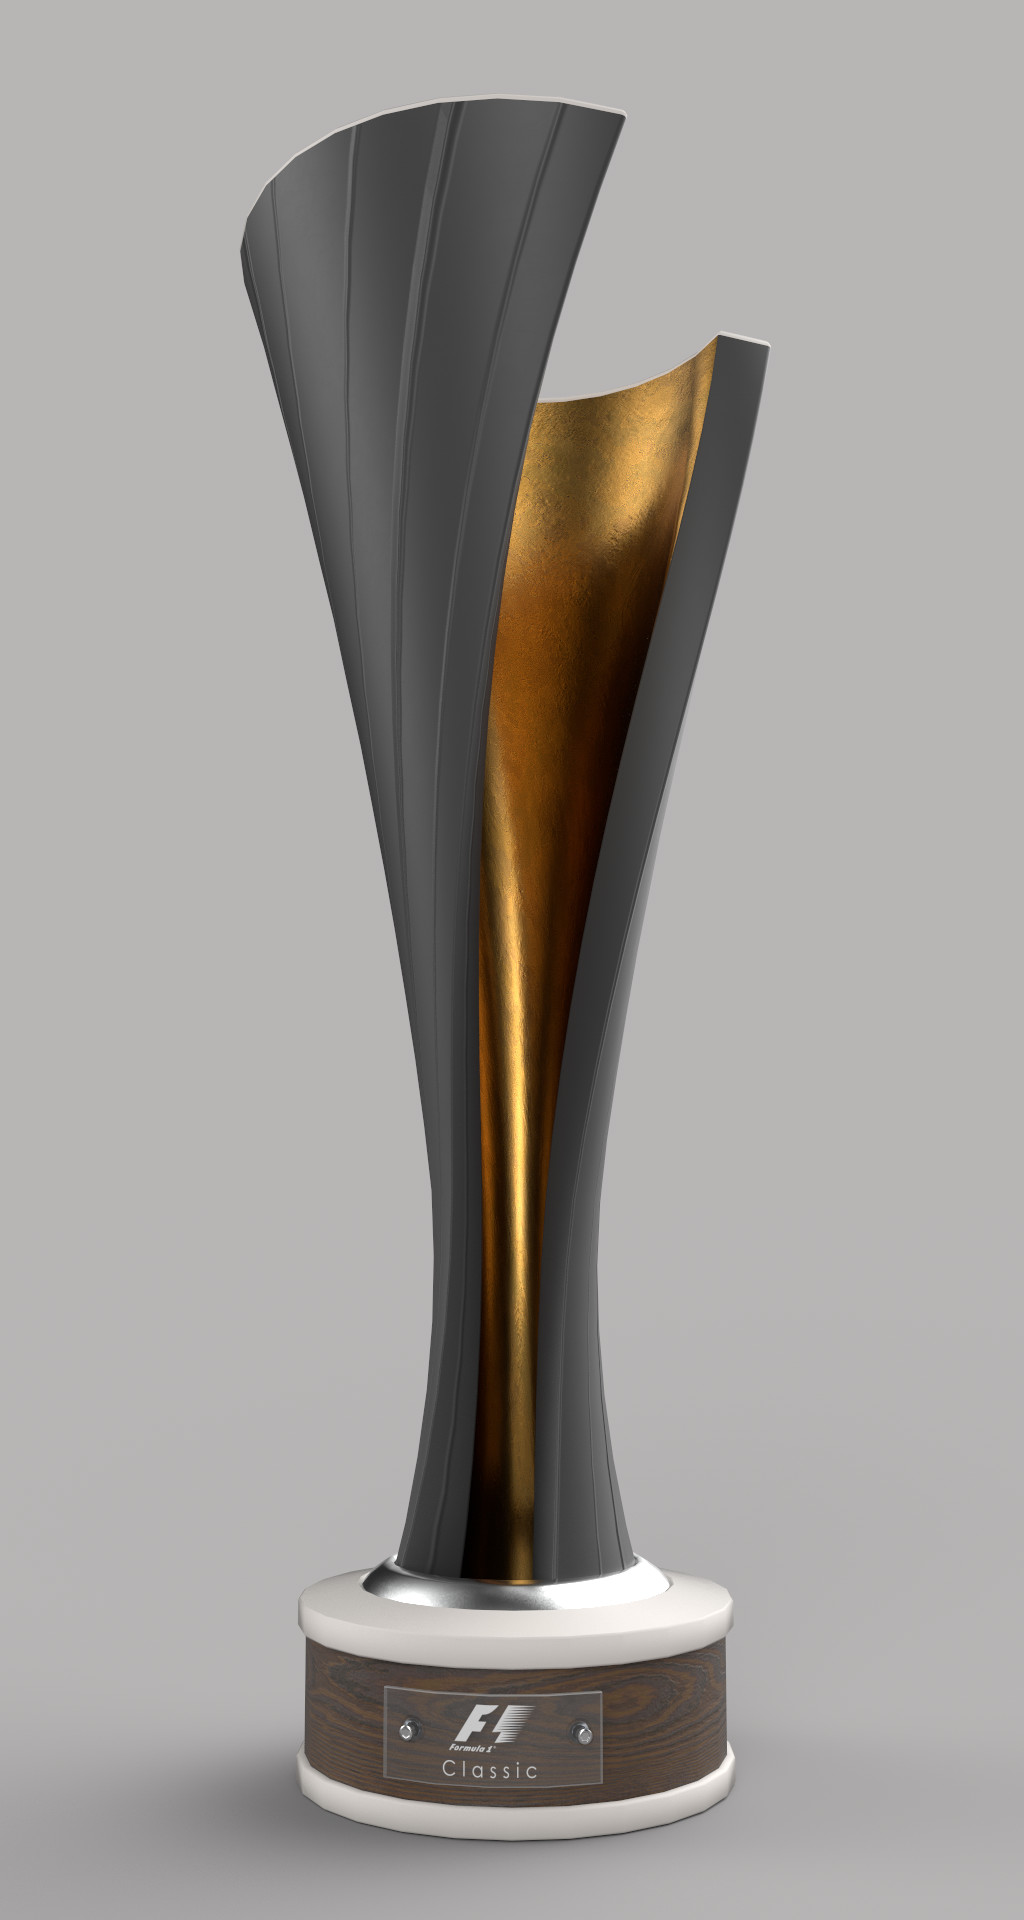 Adam Batham - F1 Classic Trophy